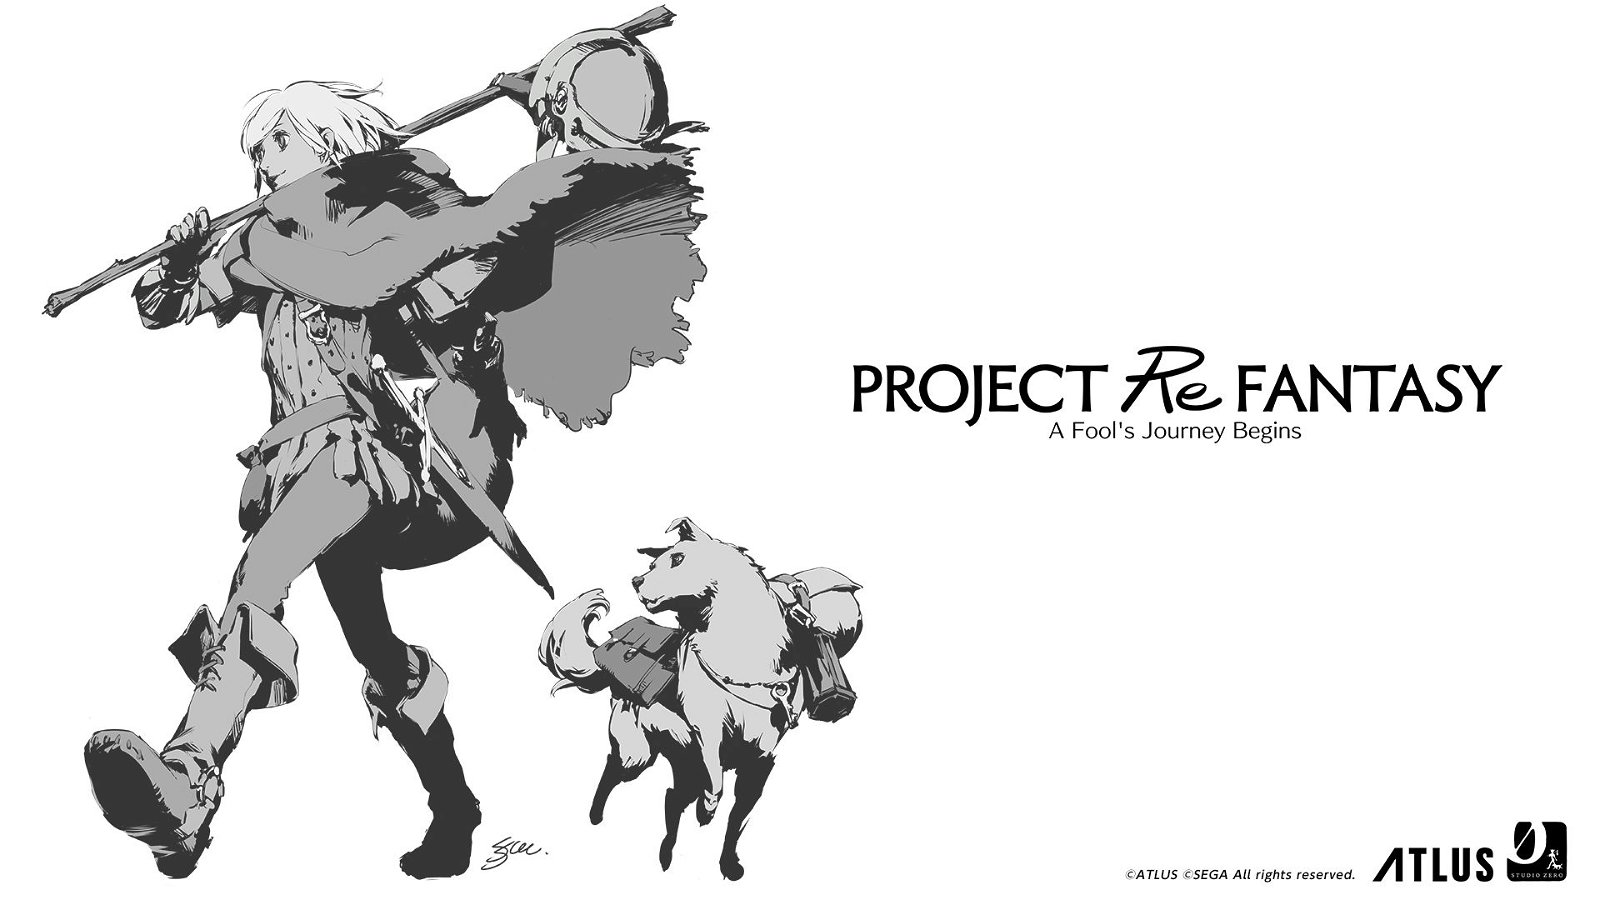 Project Re Fantasy